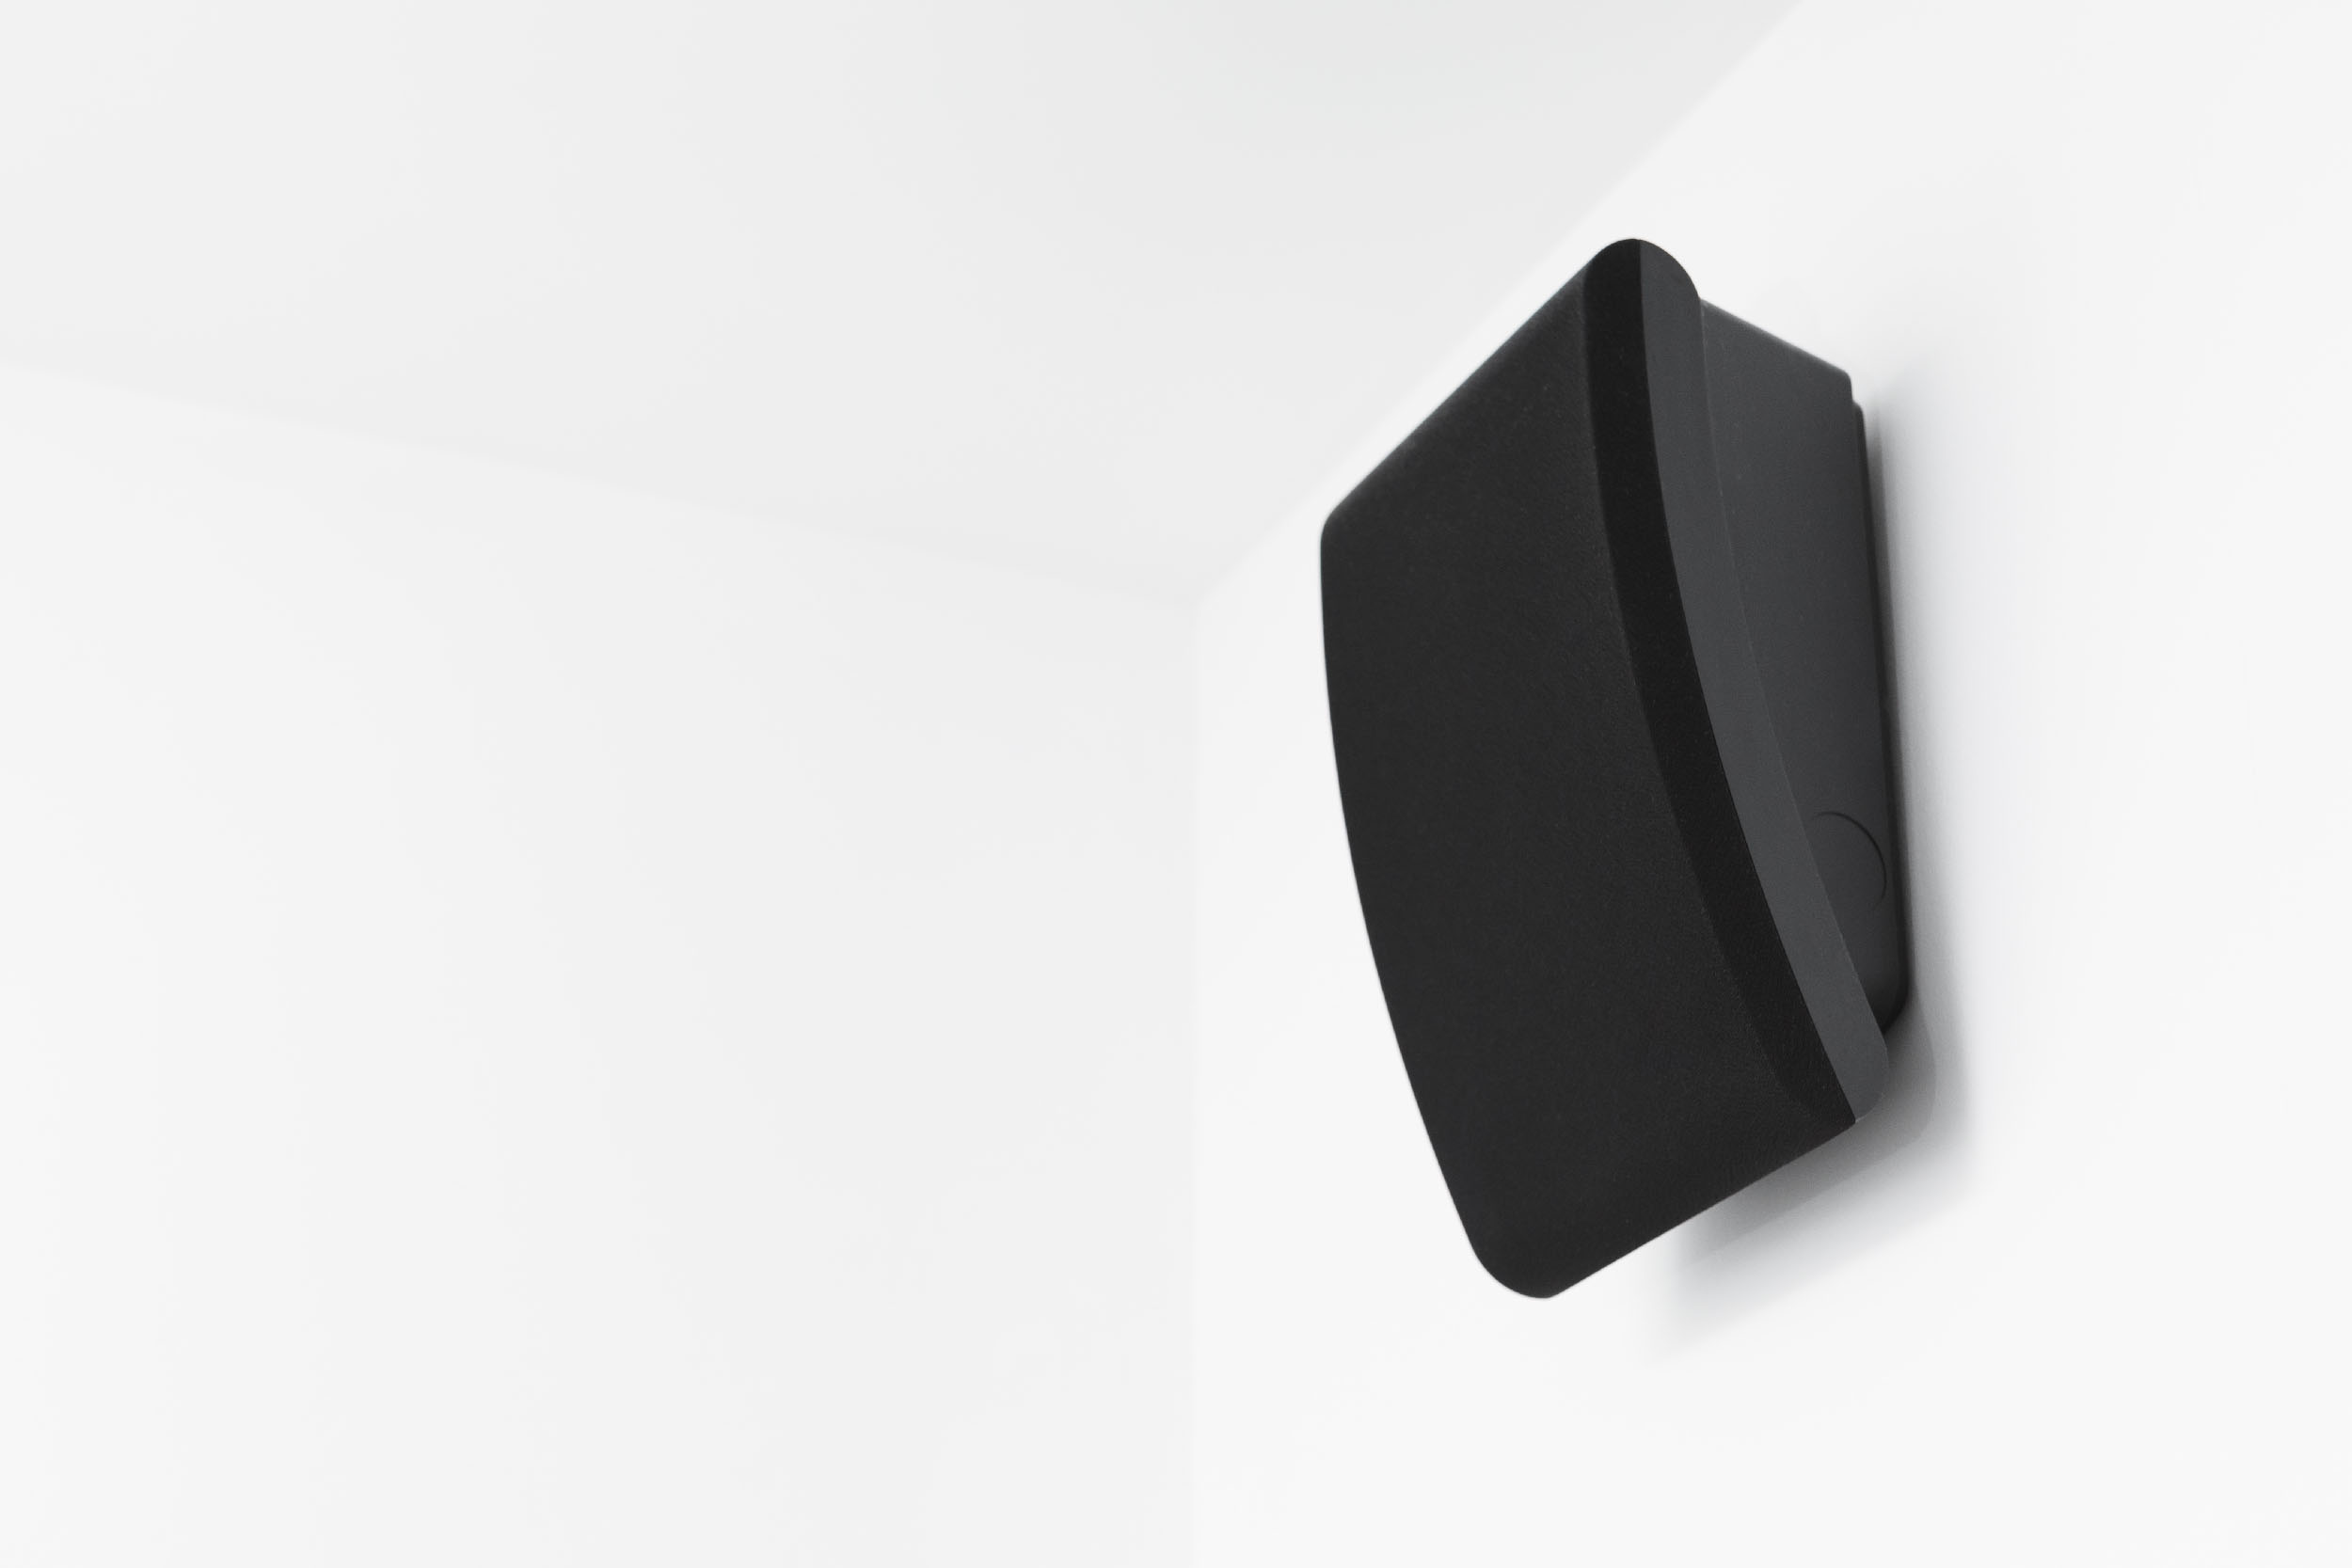 intercom speaker mounted on white wall